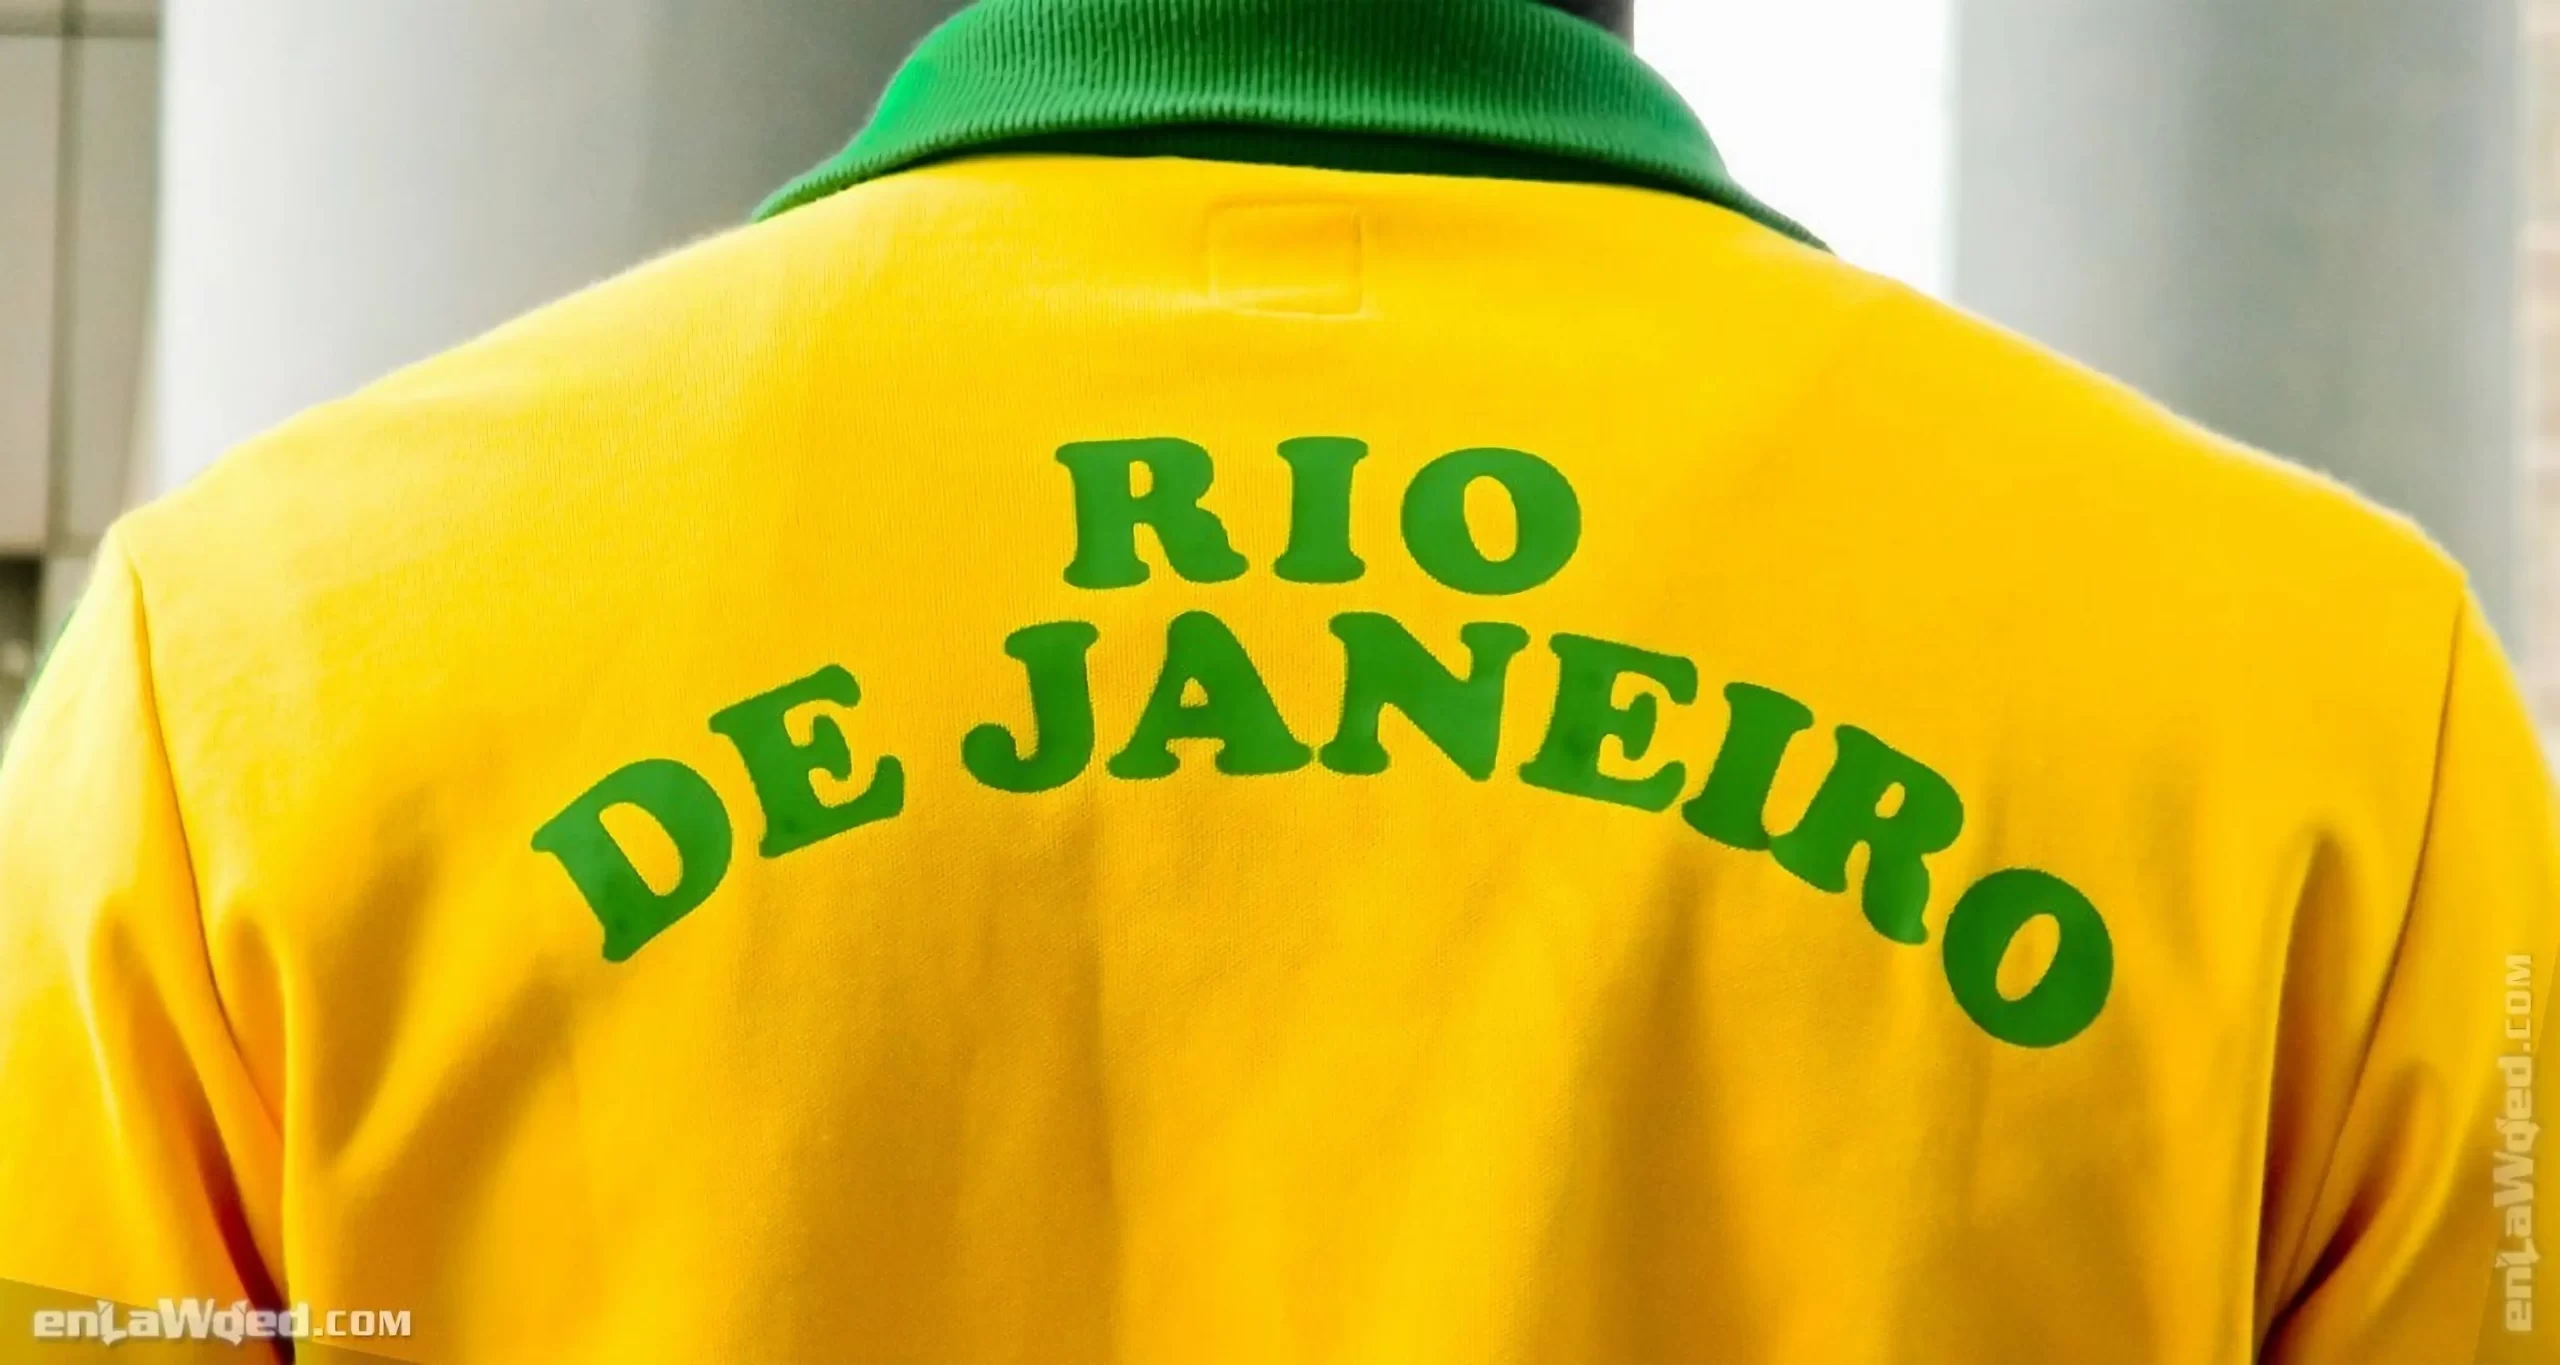 Men’s 2006 Rio de Janeiro TT-Two by Adidas Originals: Tremendous (EnLawded.com file #lmchk90423ip2y122324kg9st)